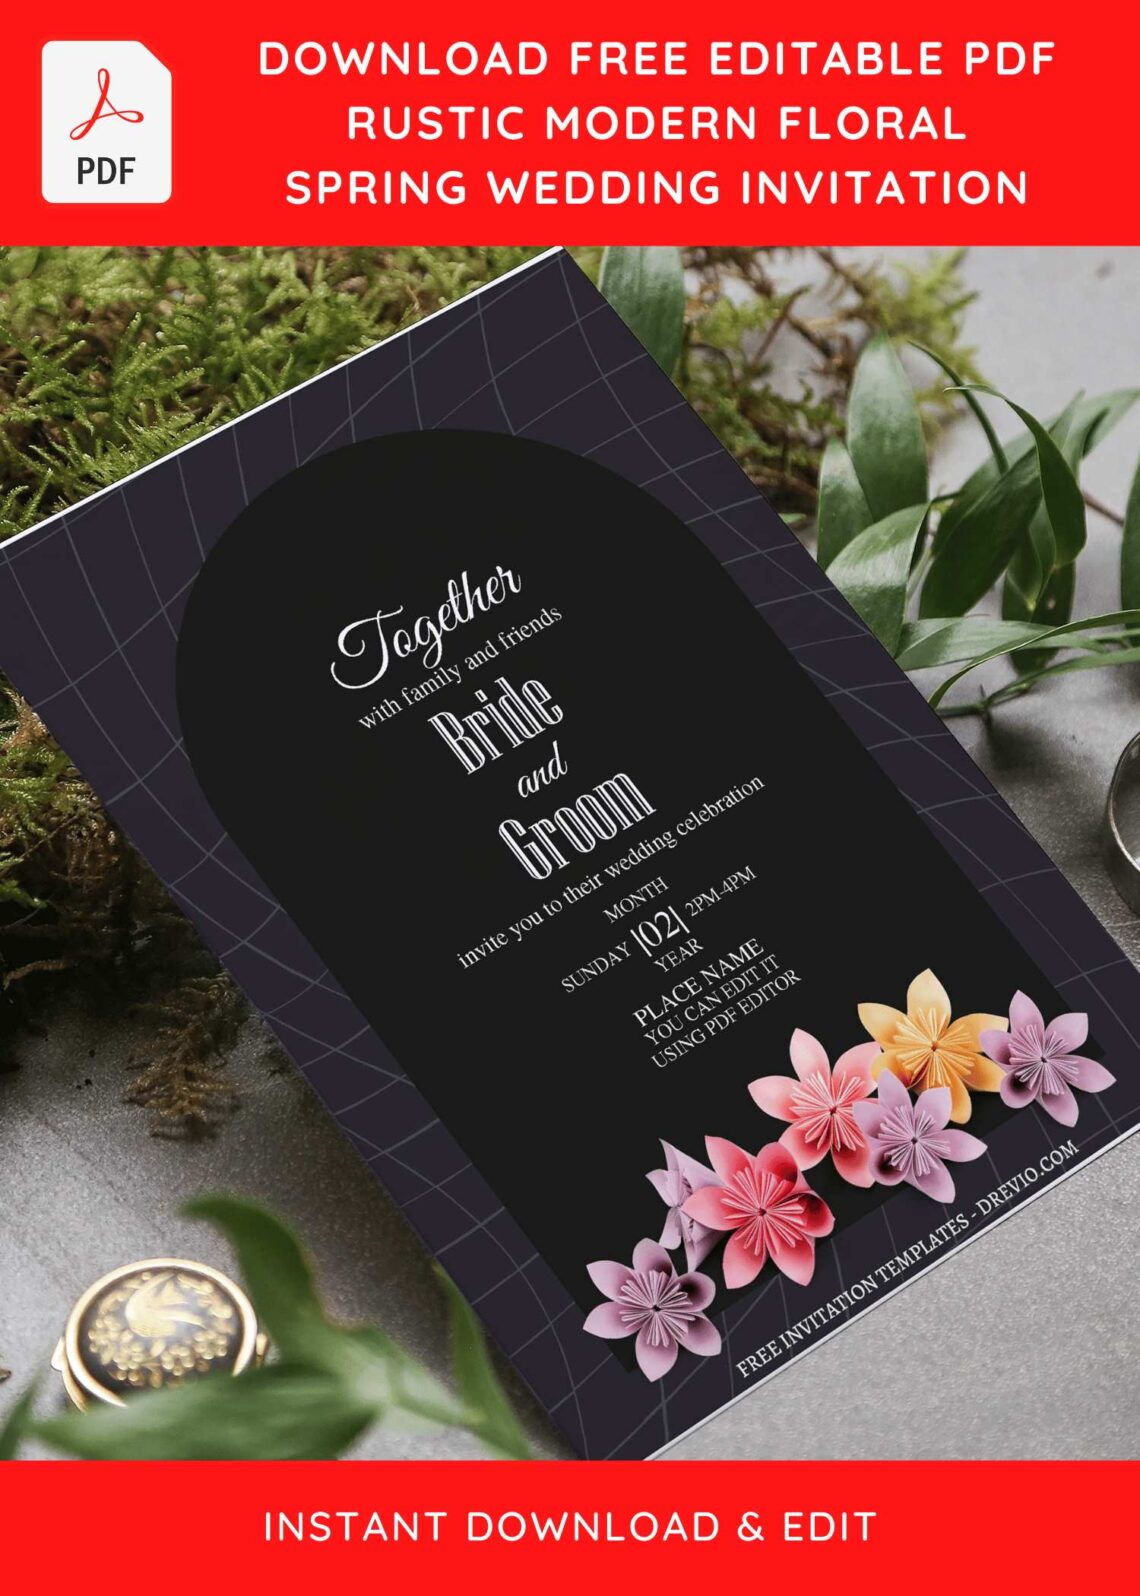 (Free Editable PDF) Magic Garden Wedding Invitation Templates with gorgeous watercolor poppy flowers